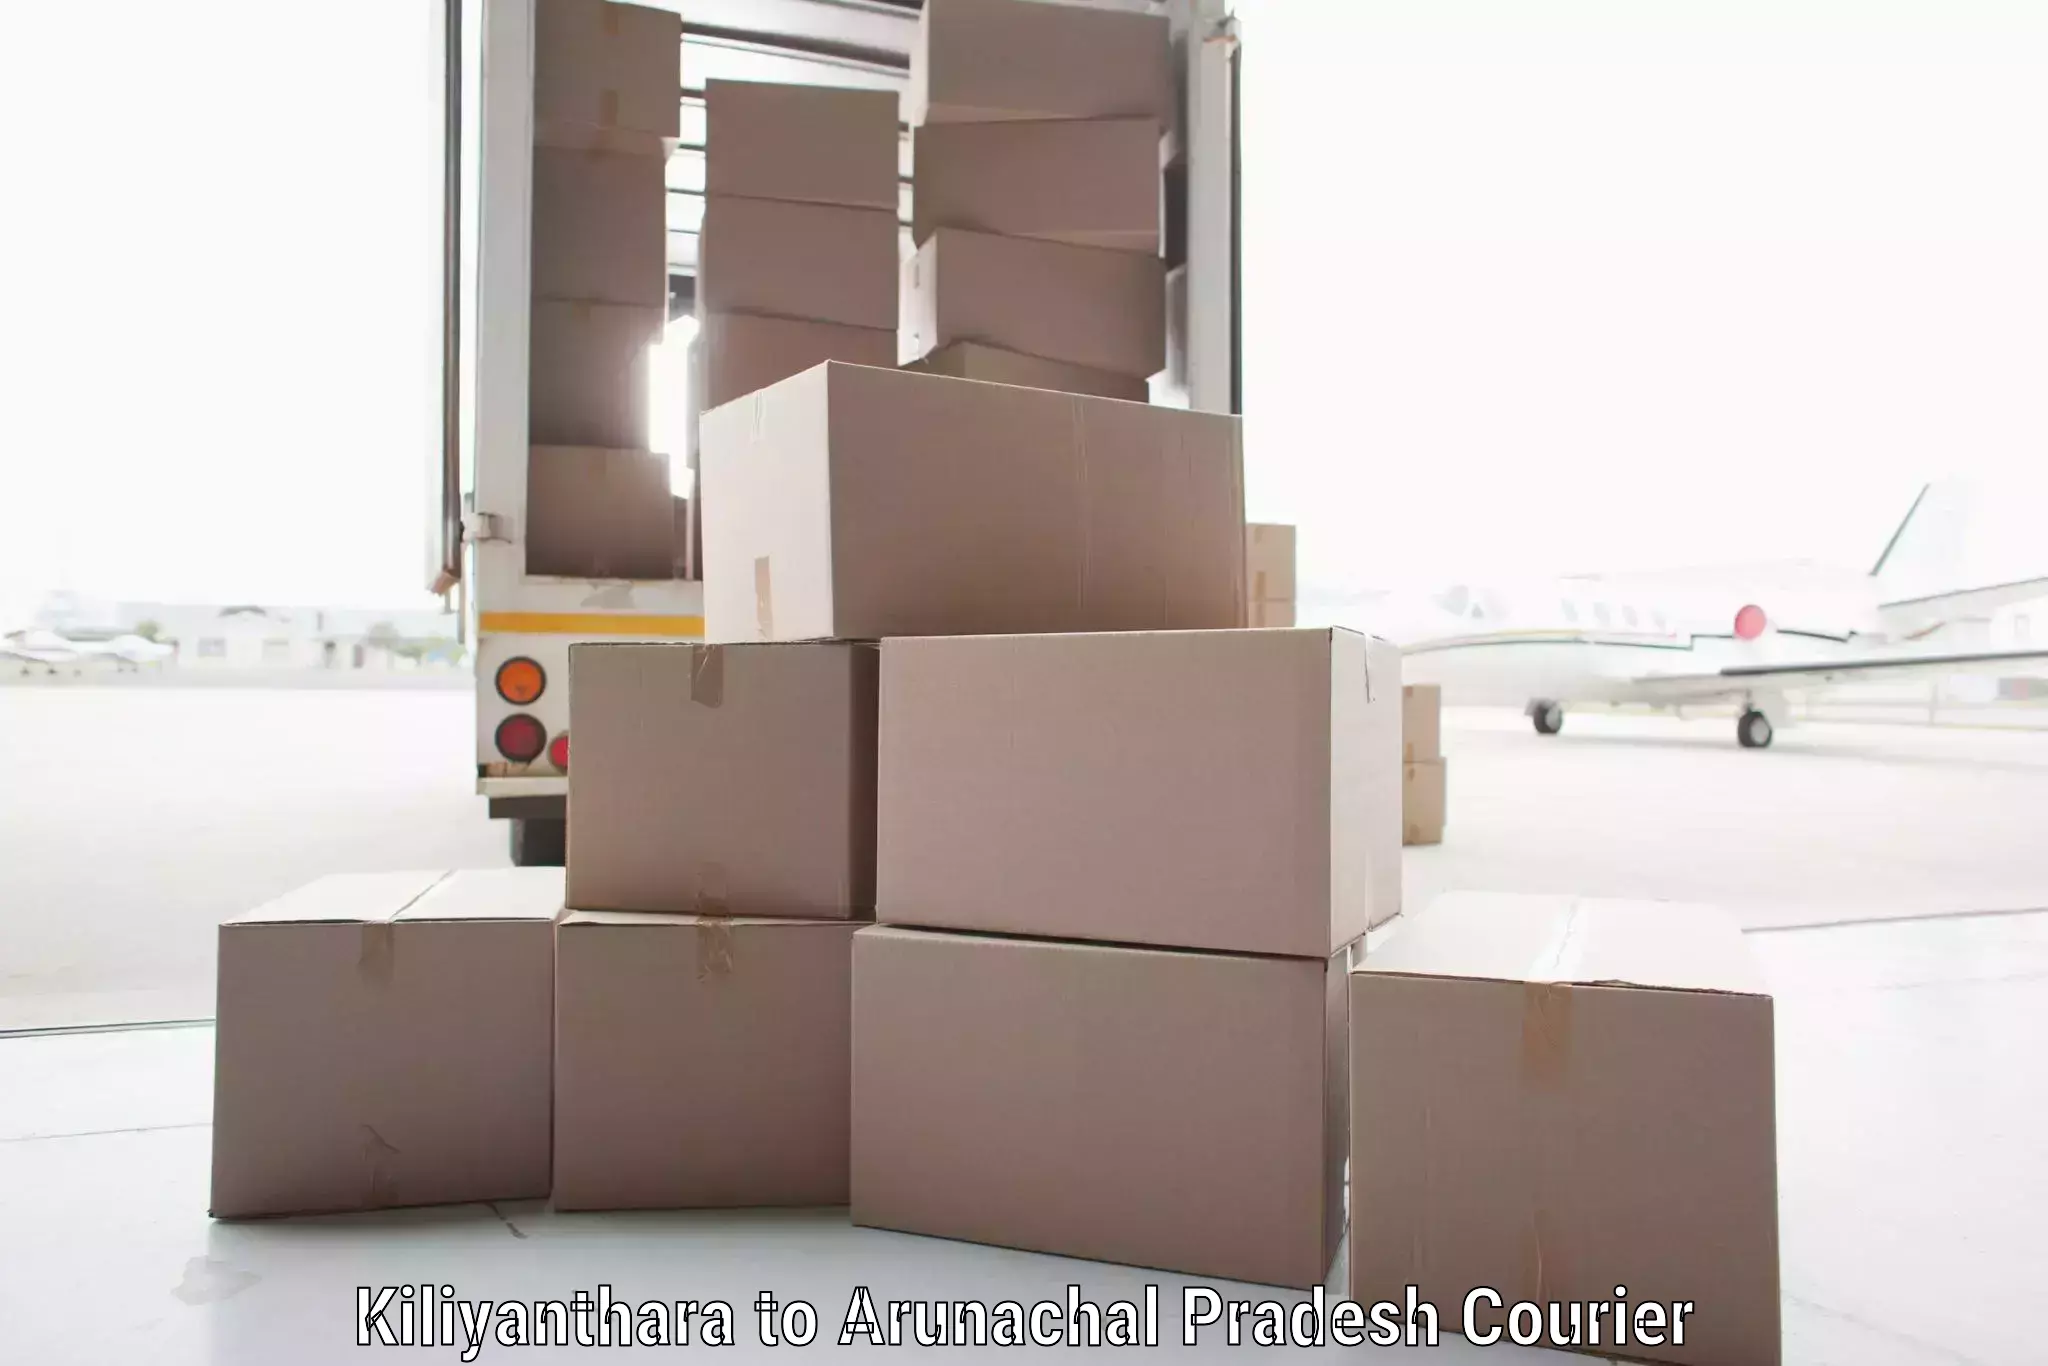 Global parcel delivery in Kiliyanthara to Arunachal Pradesh